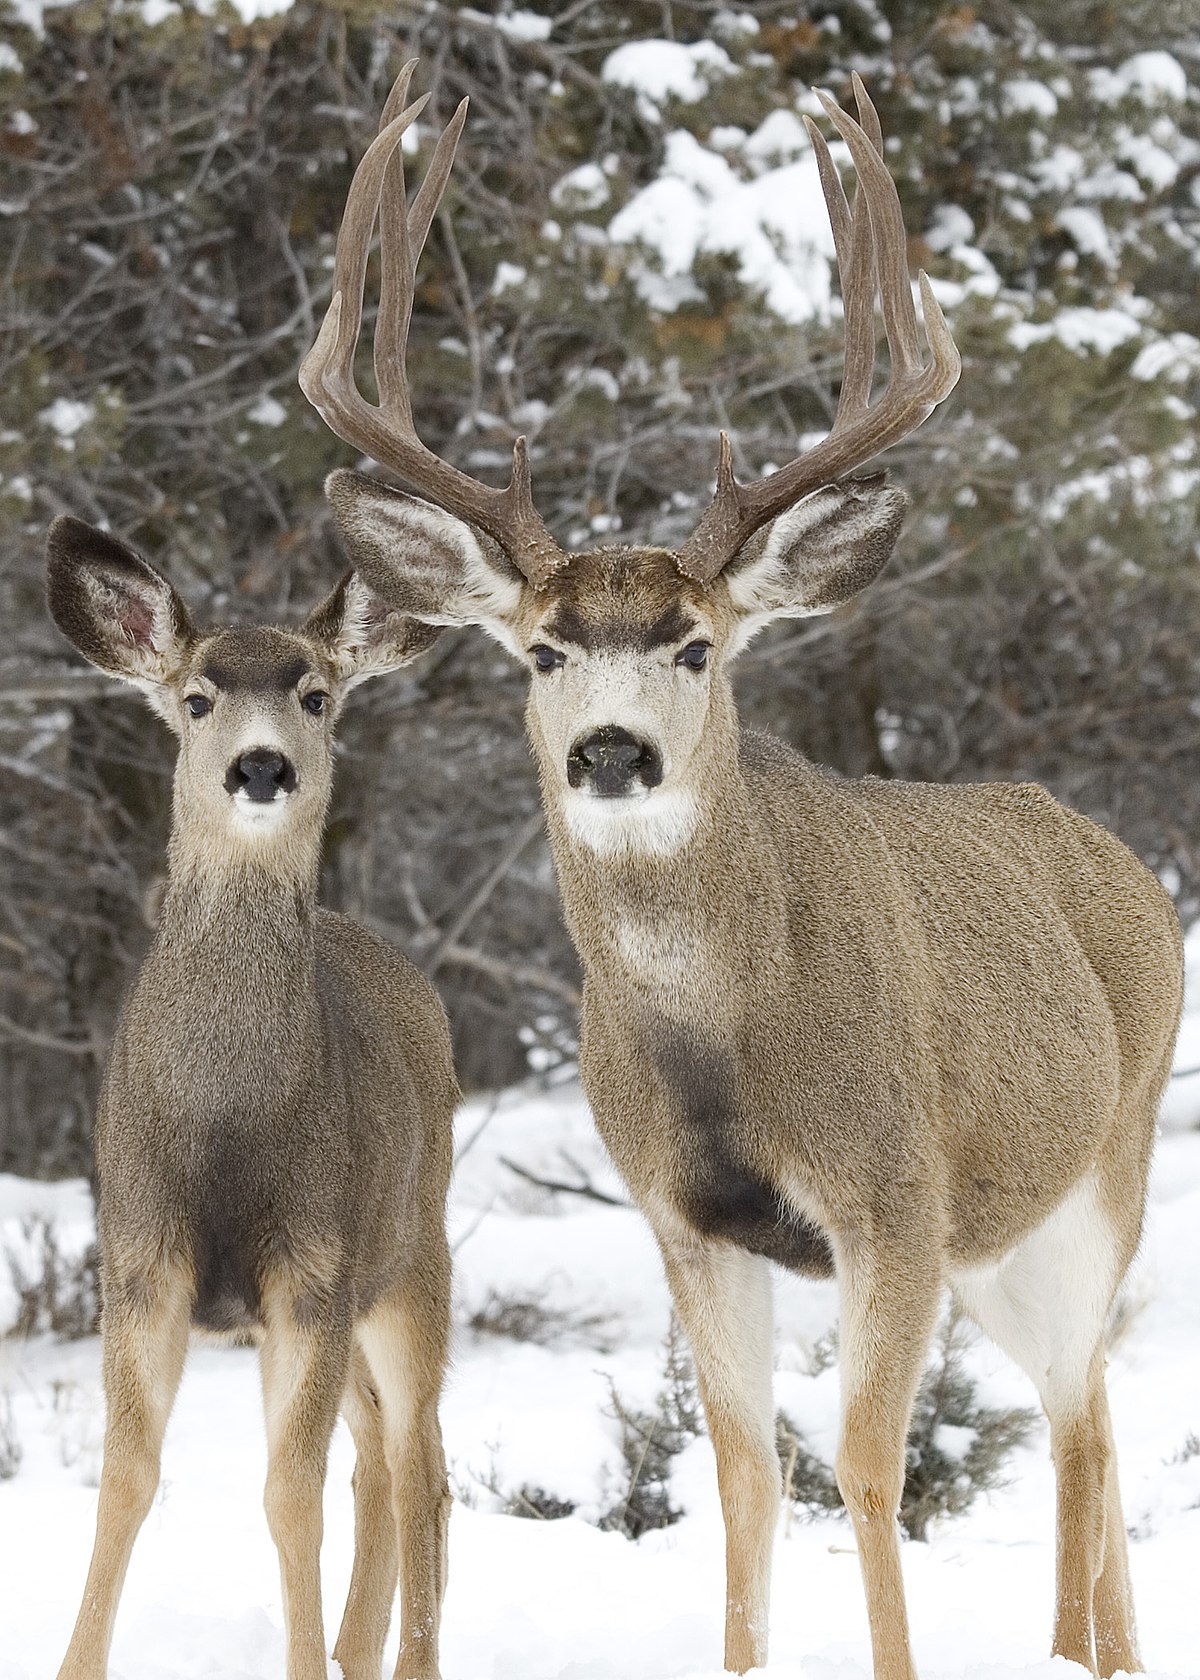 Mule deer - Wikipedia